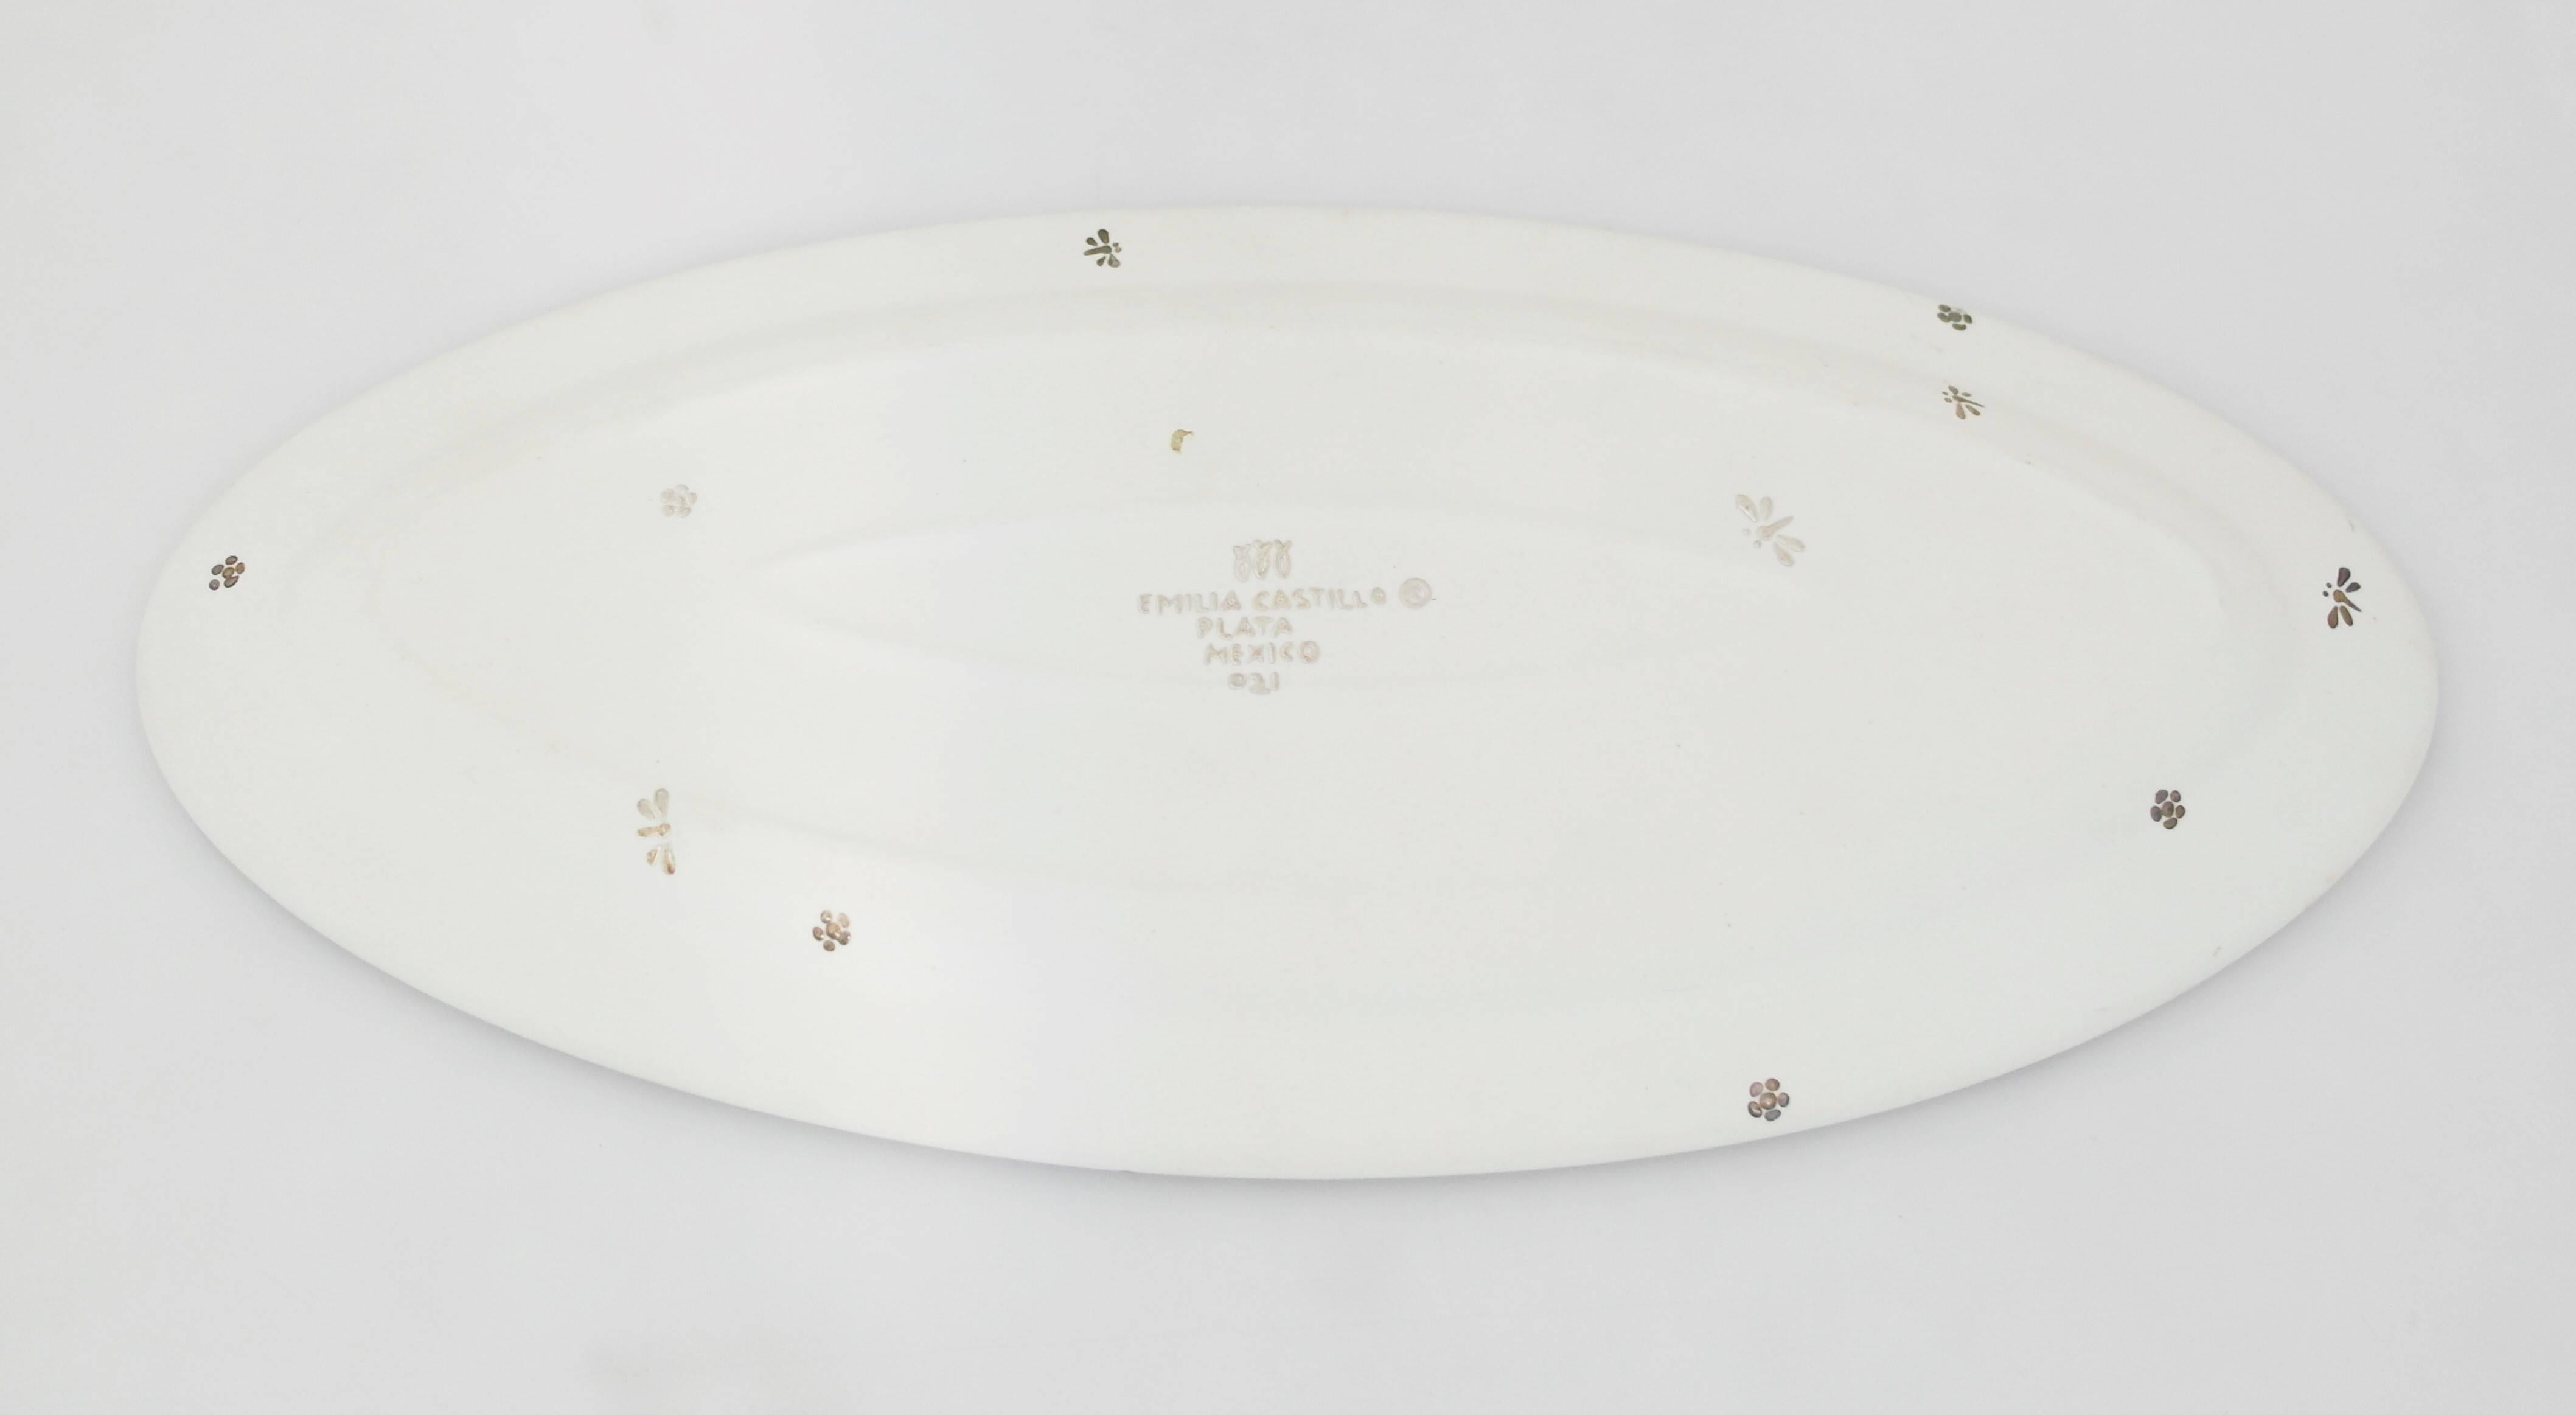 Emilia Castillo Ceramic Plate with Sterling Silver Overlay 1